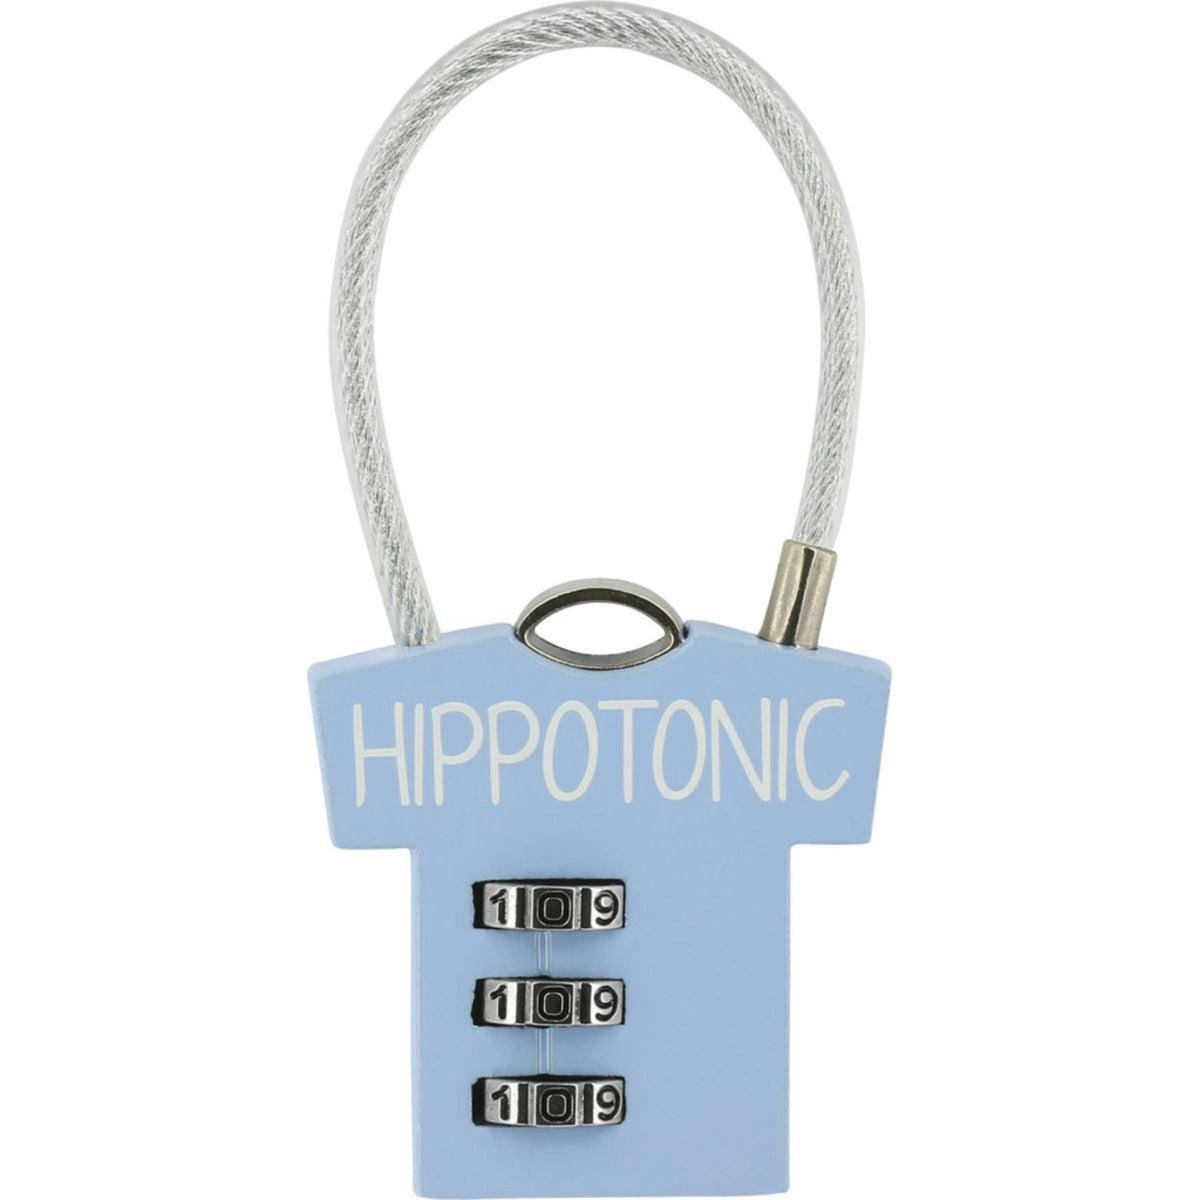 Hippotonic Putzbox Padlock Blau